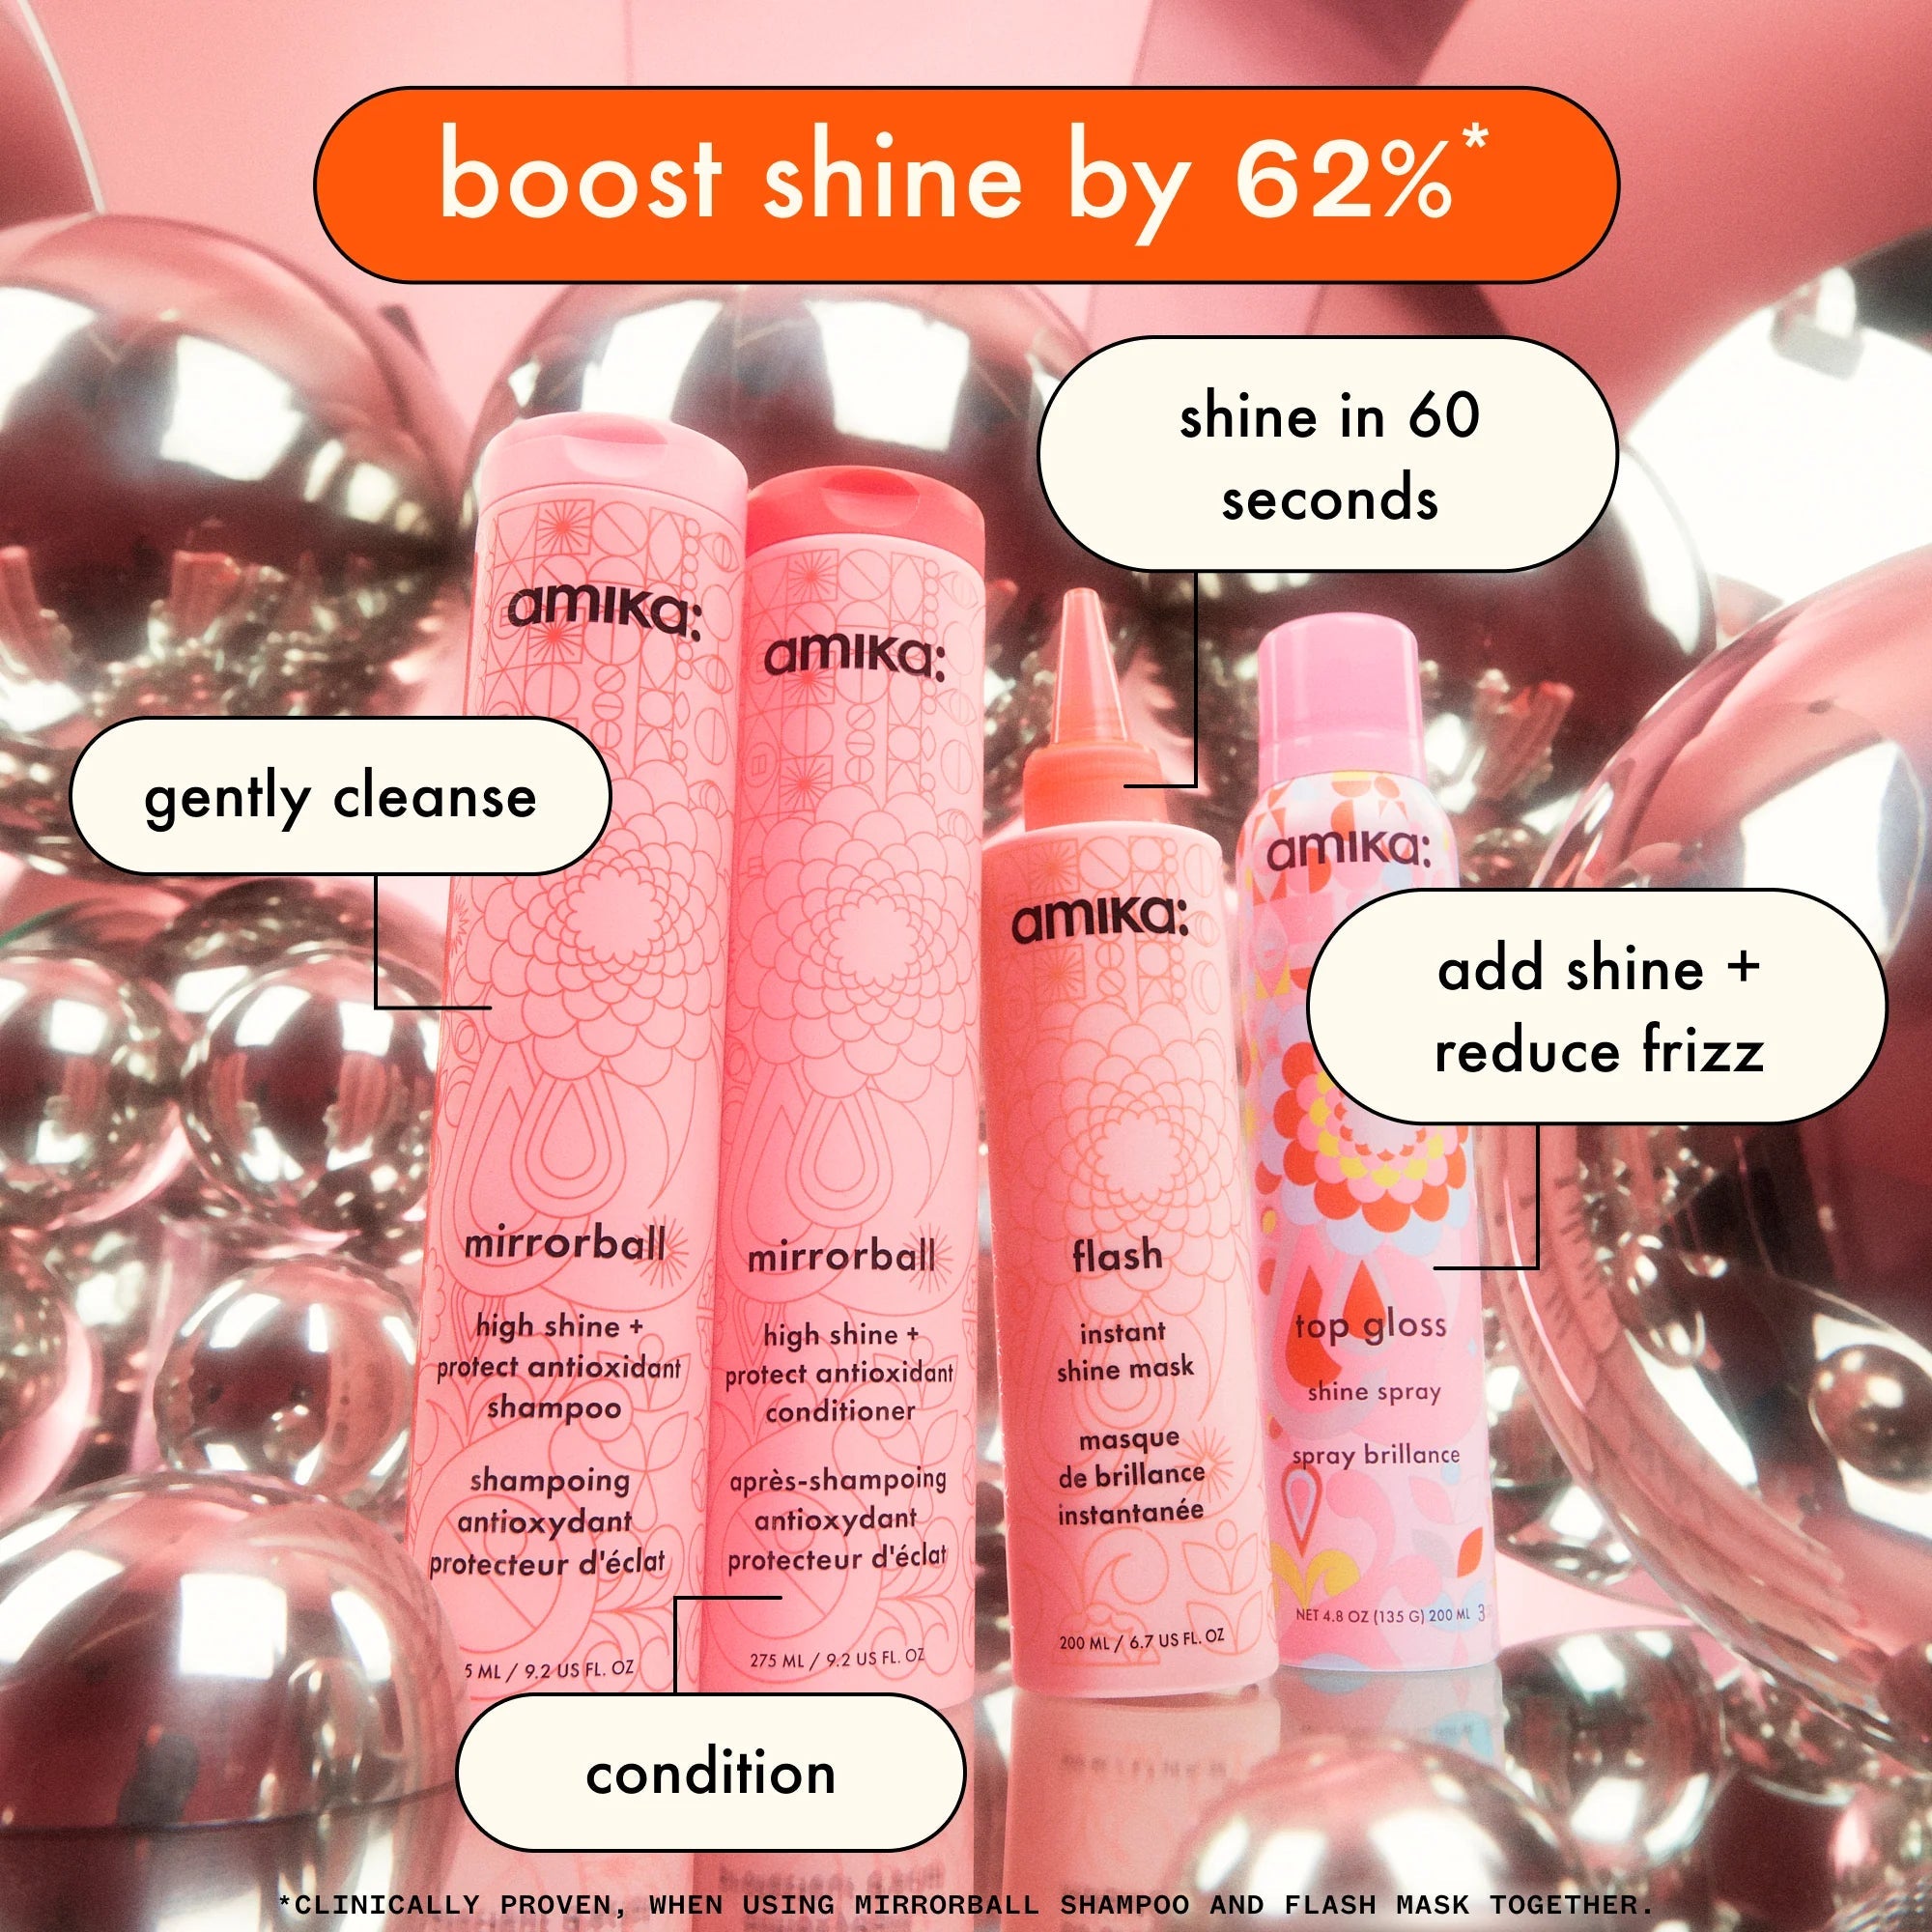 Amika Top Gloss Shine Spray-Leave-in-Amika-JK Shop